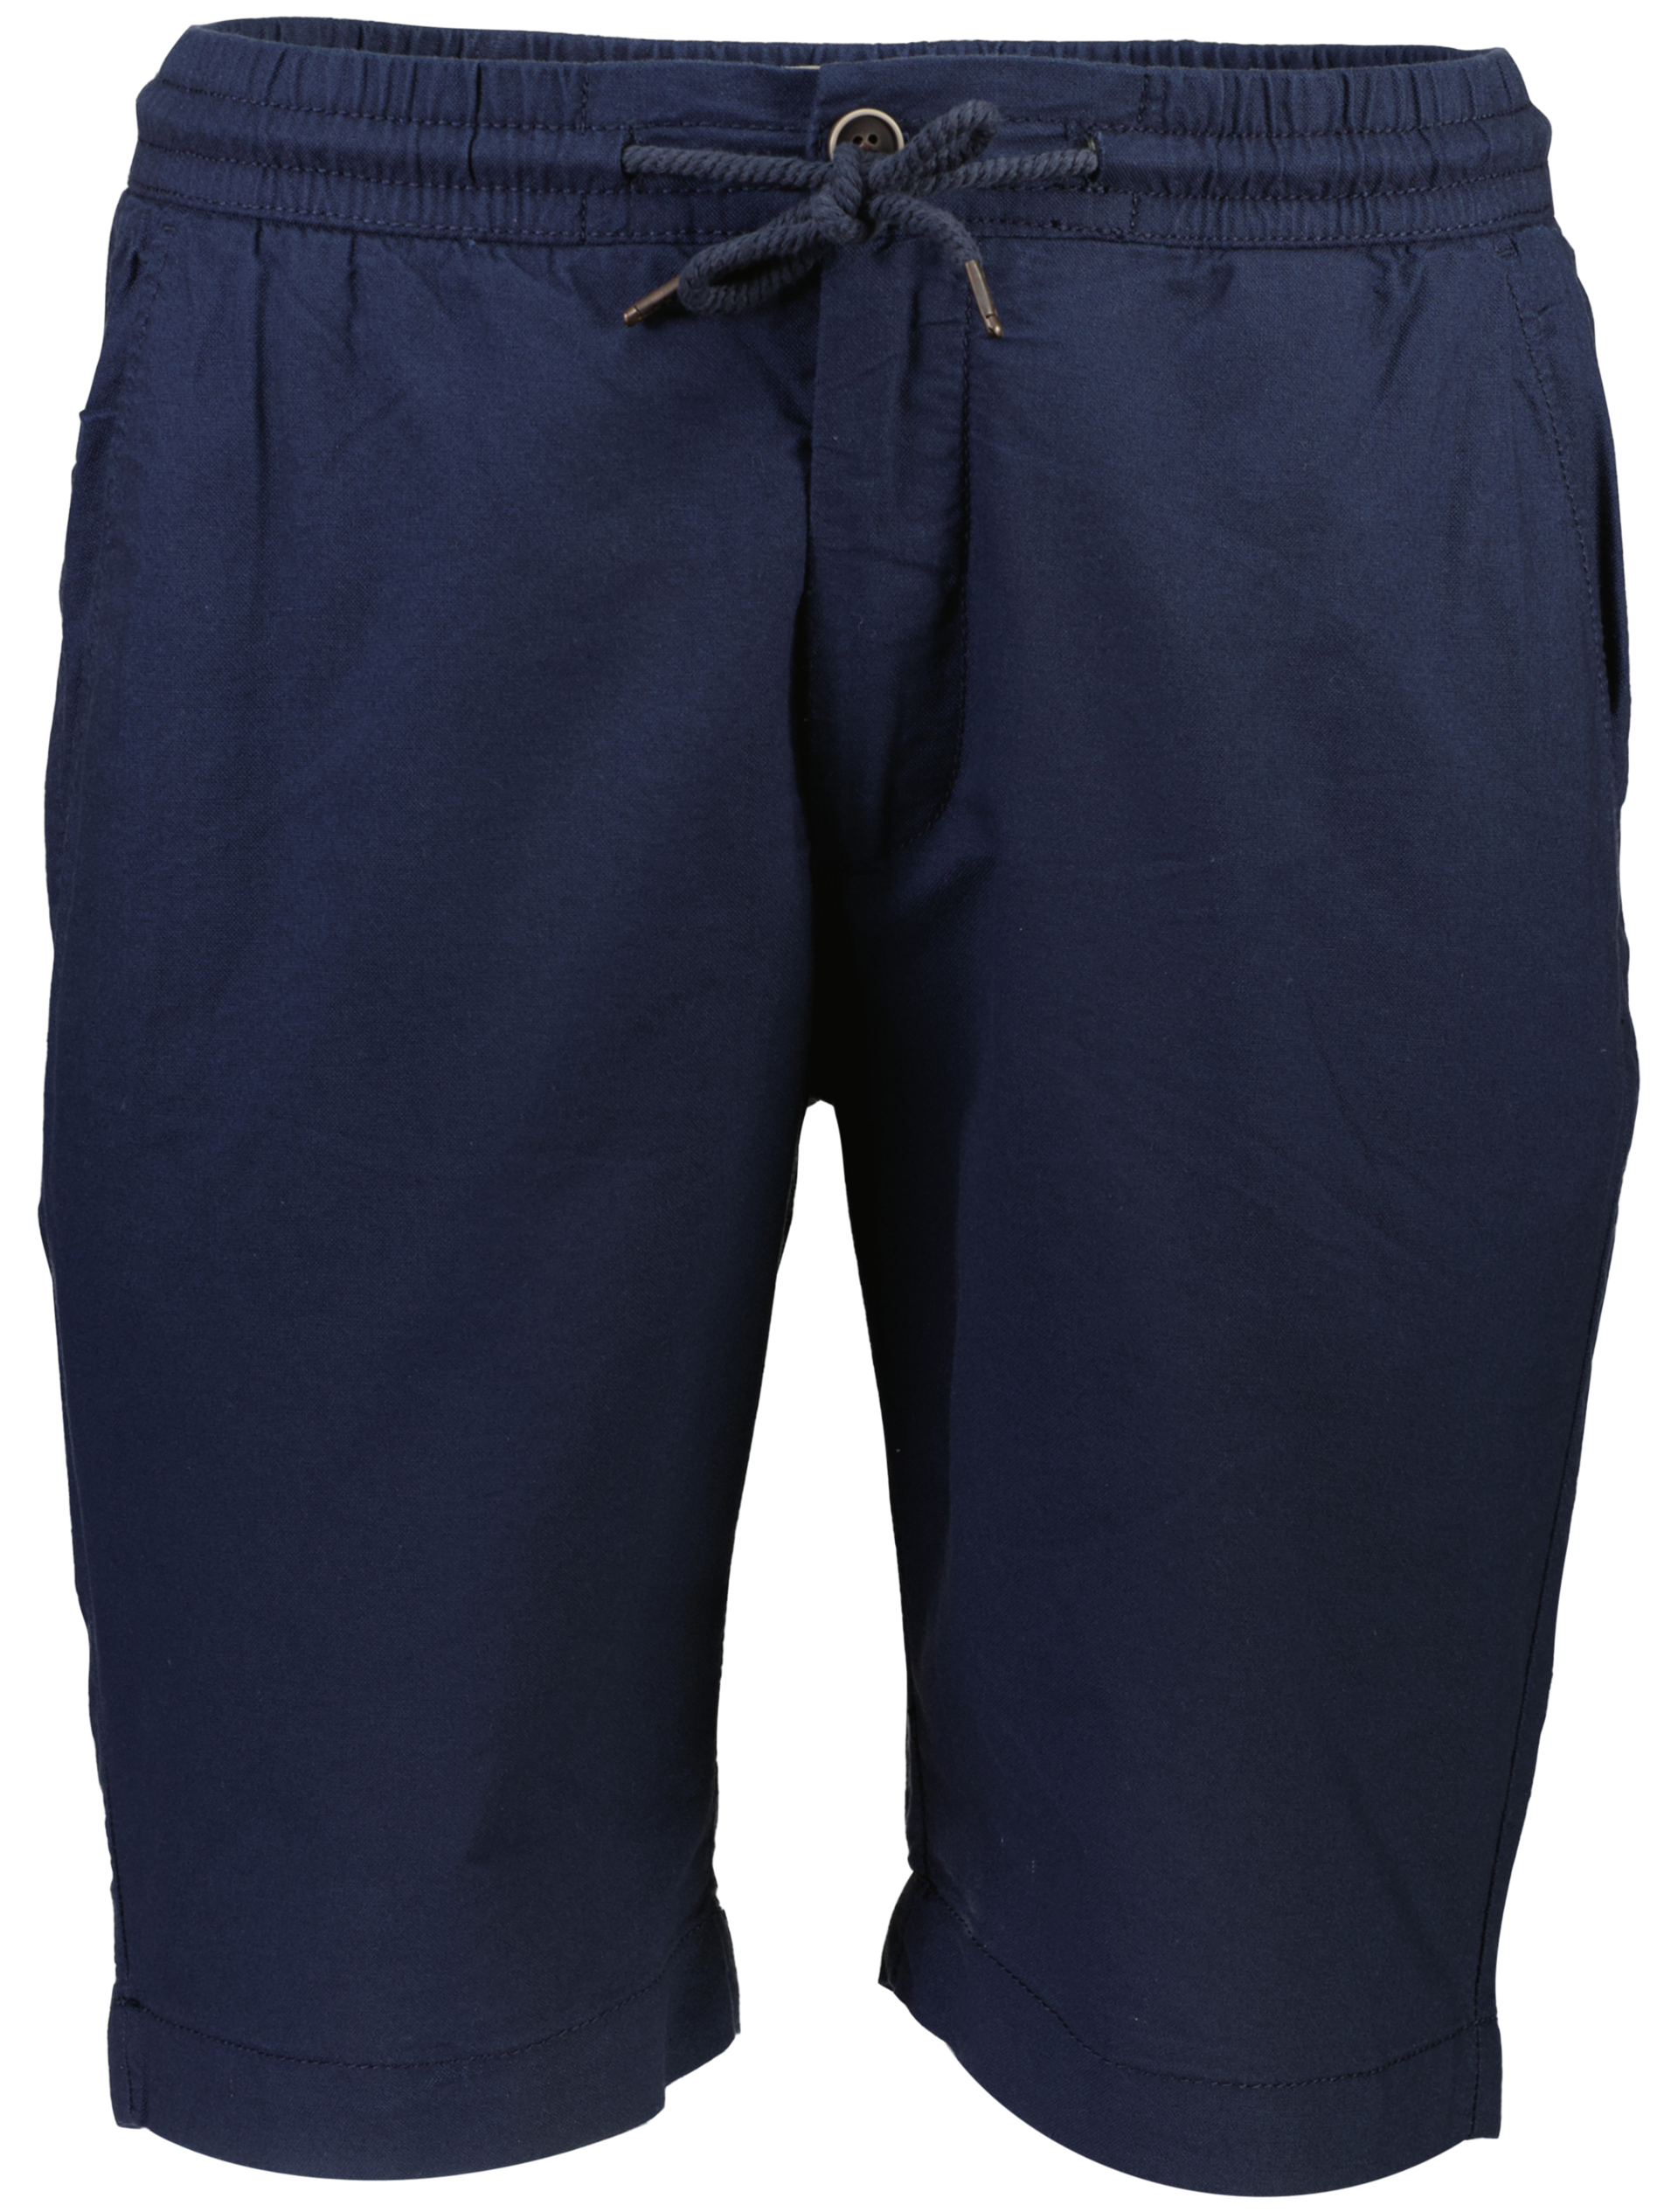 Jack's Casual shorts blå / navy